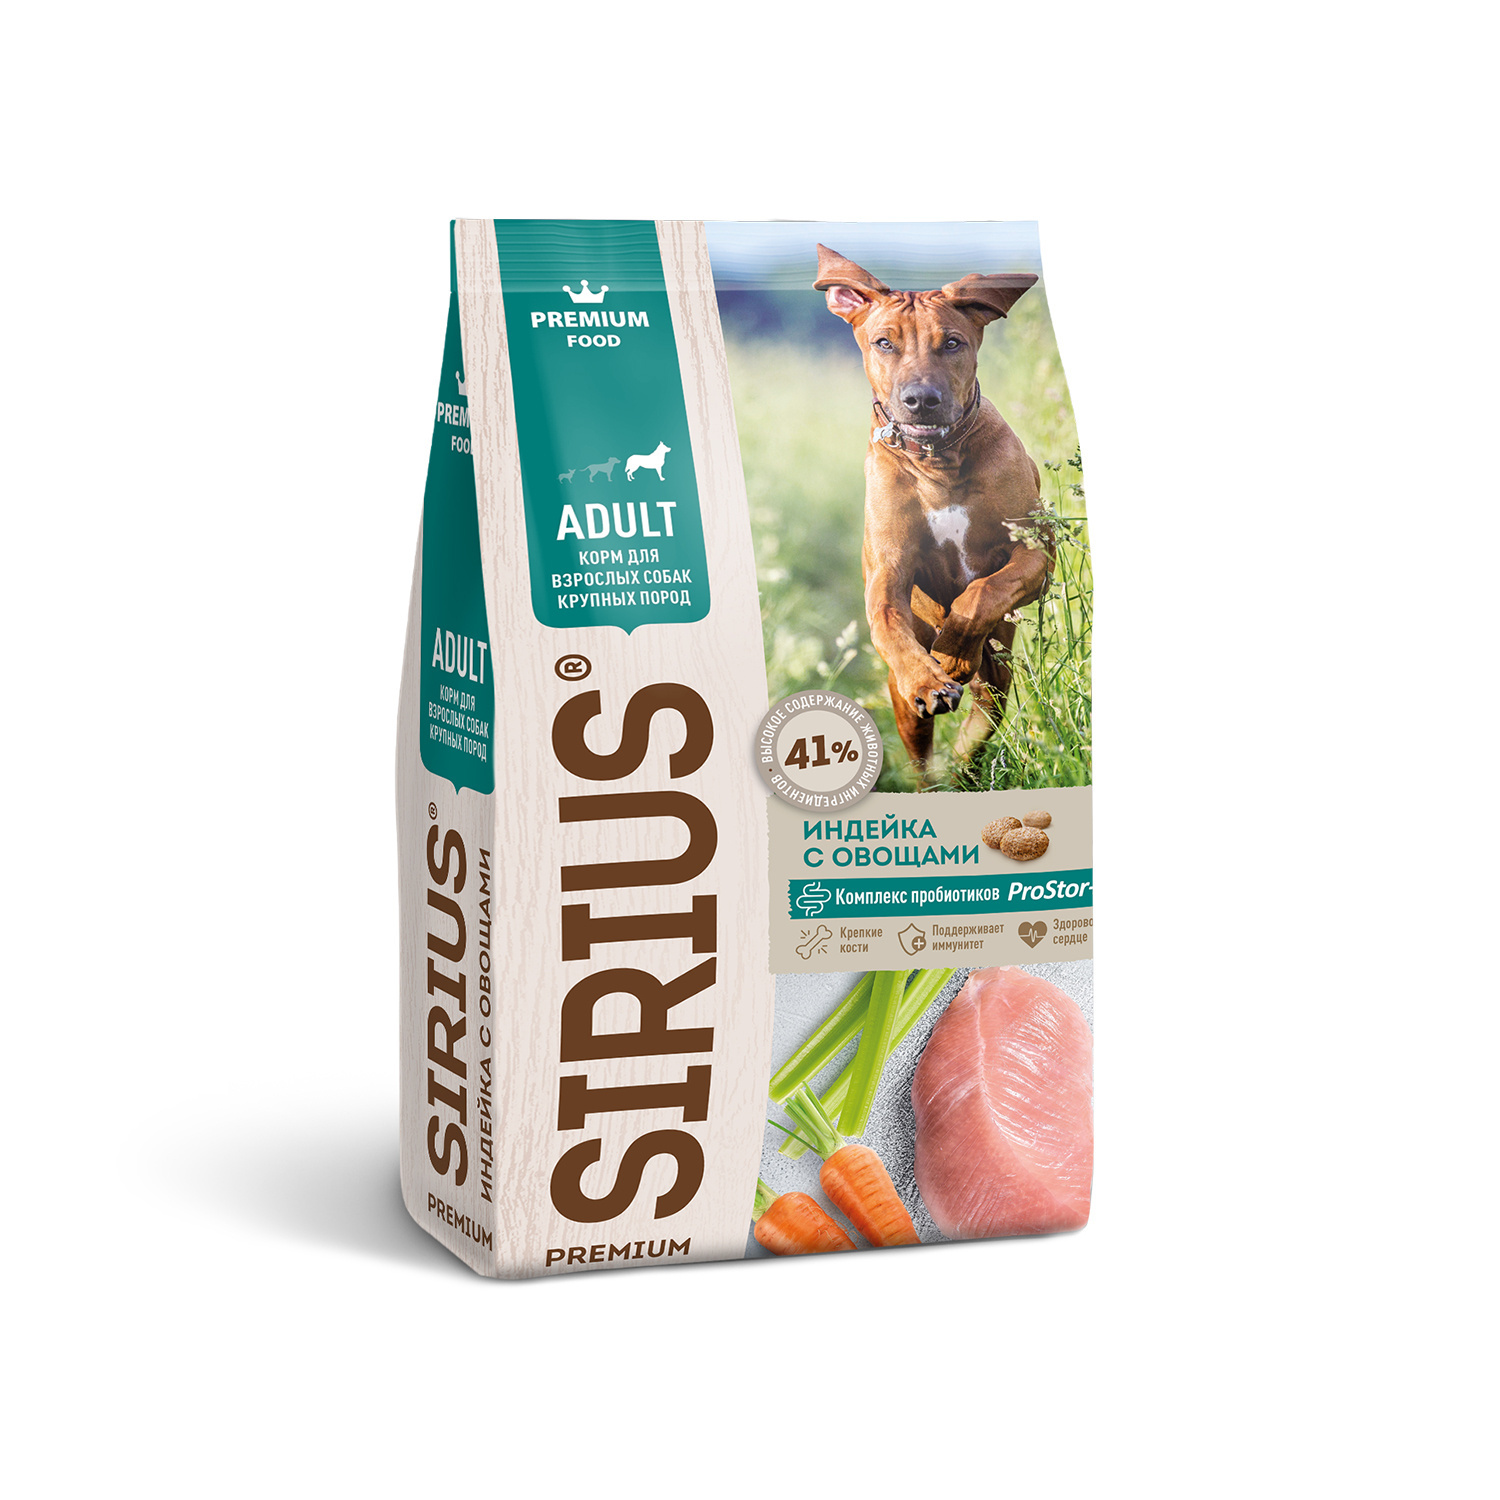 Sirius Sirius сухой корм для собак крупных пород, индейка с овощами (15 кг) sirius sirius сухой корм для собак говядина с овощами 2 кг